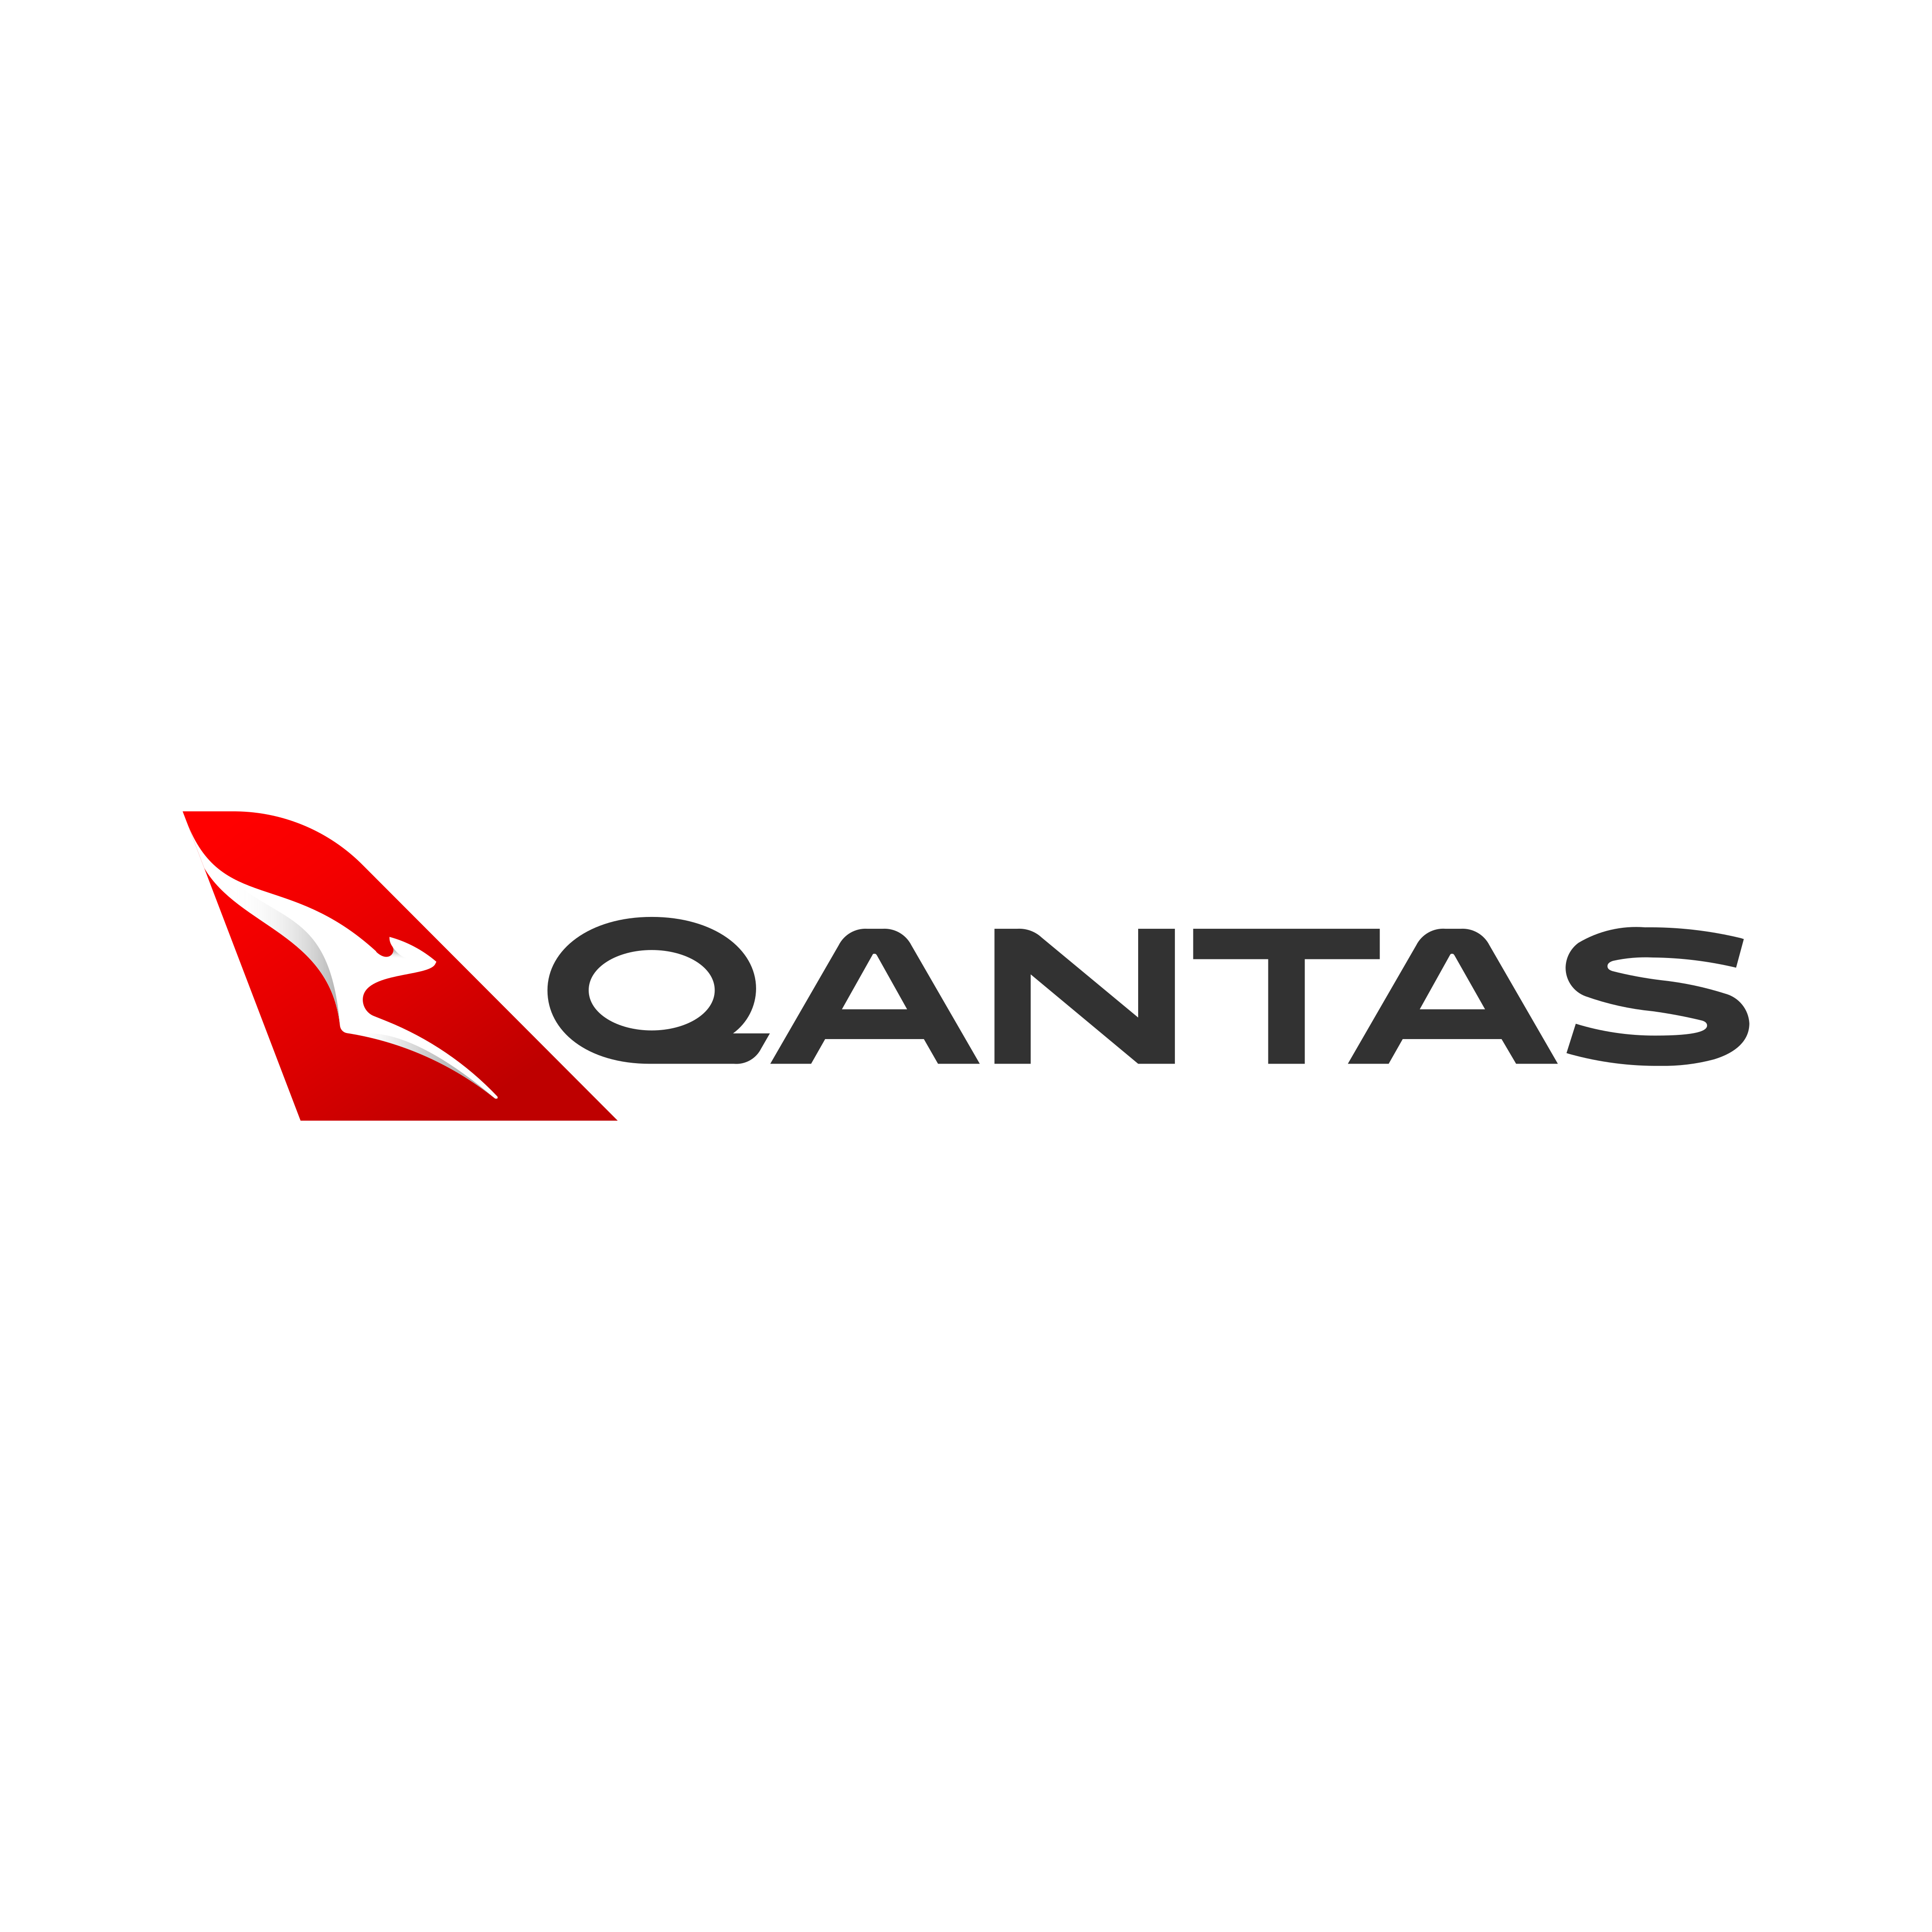 qantas airways logo 0 - Qantas Airways Logo